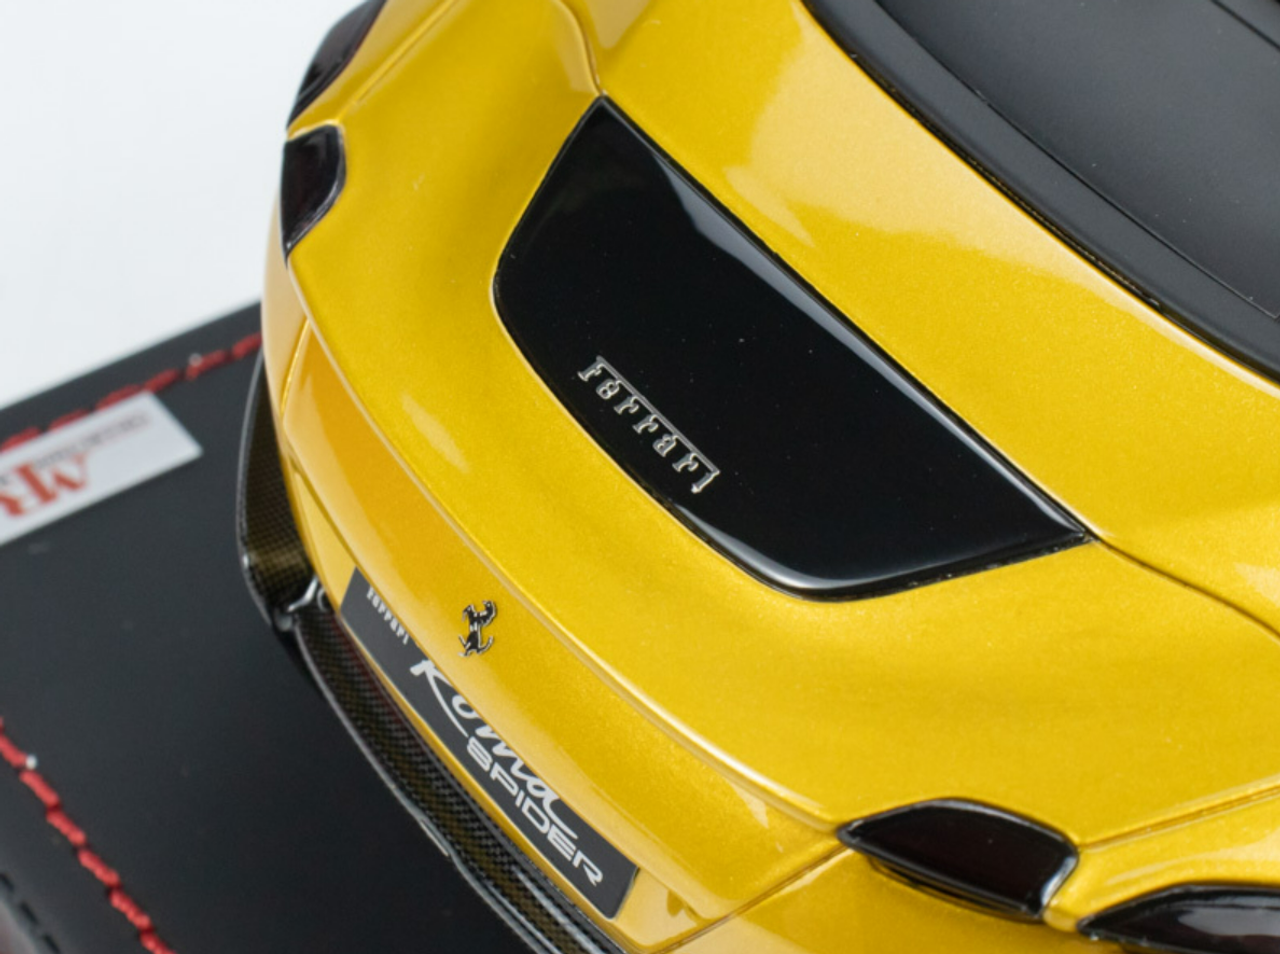 1/18 MR Collection Ferrari ROMA 2023 Convertible sports car model Yellow